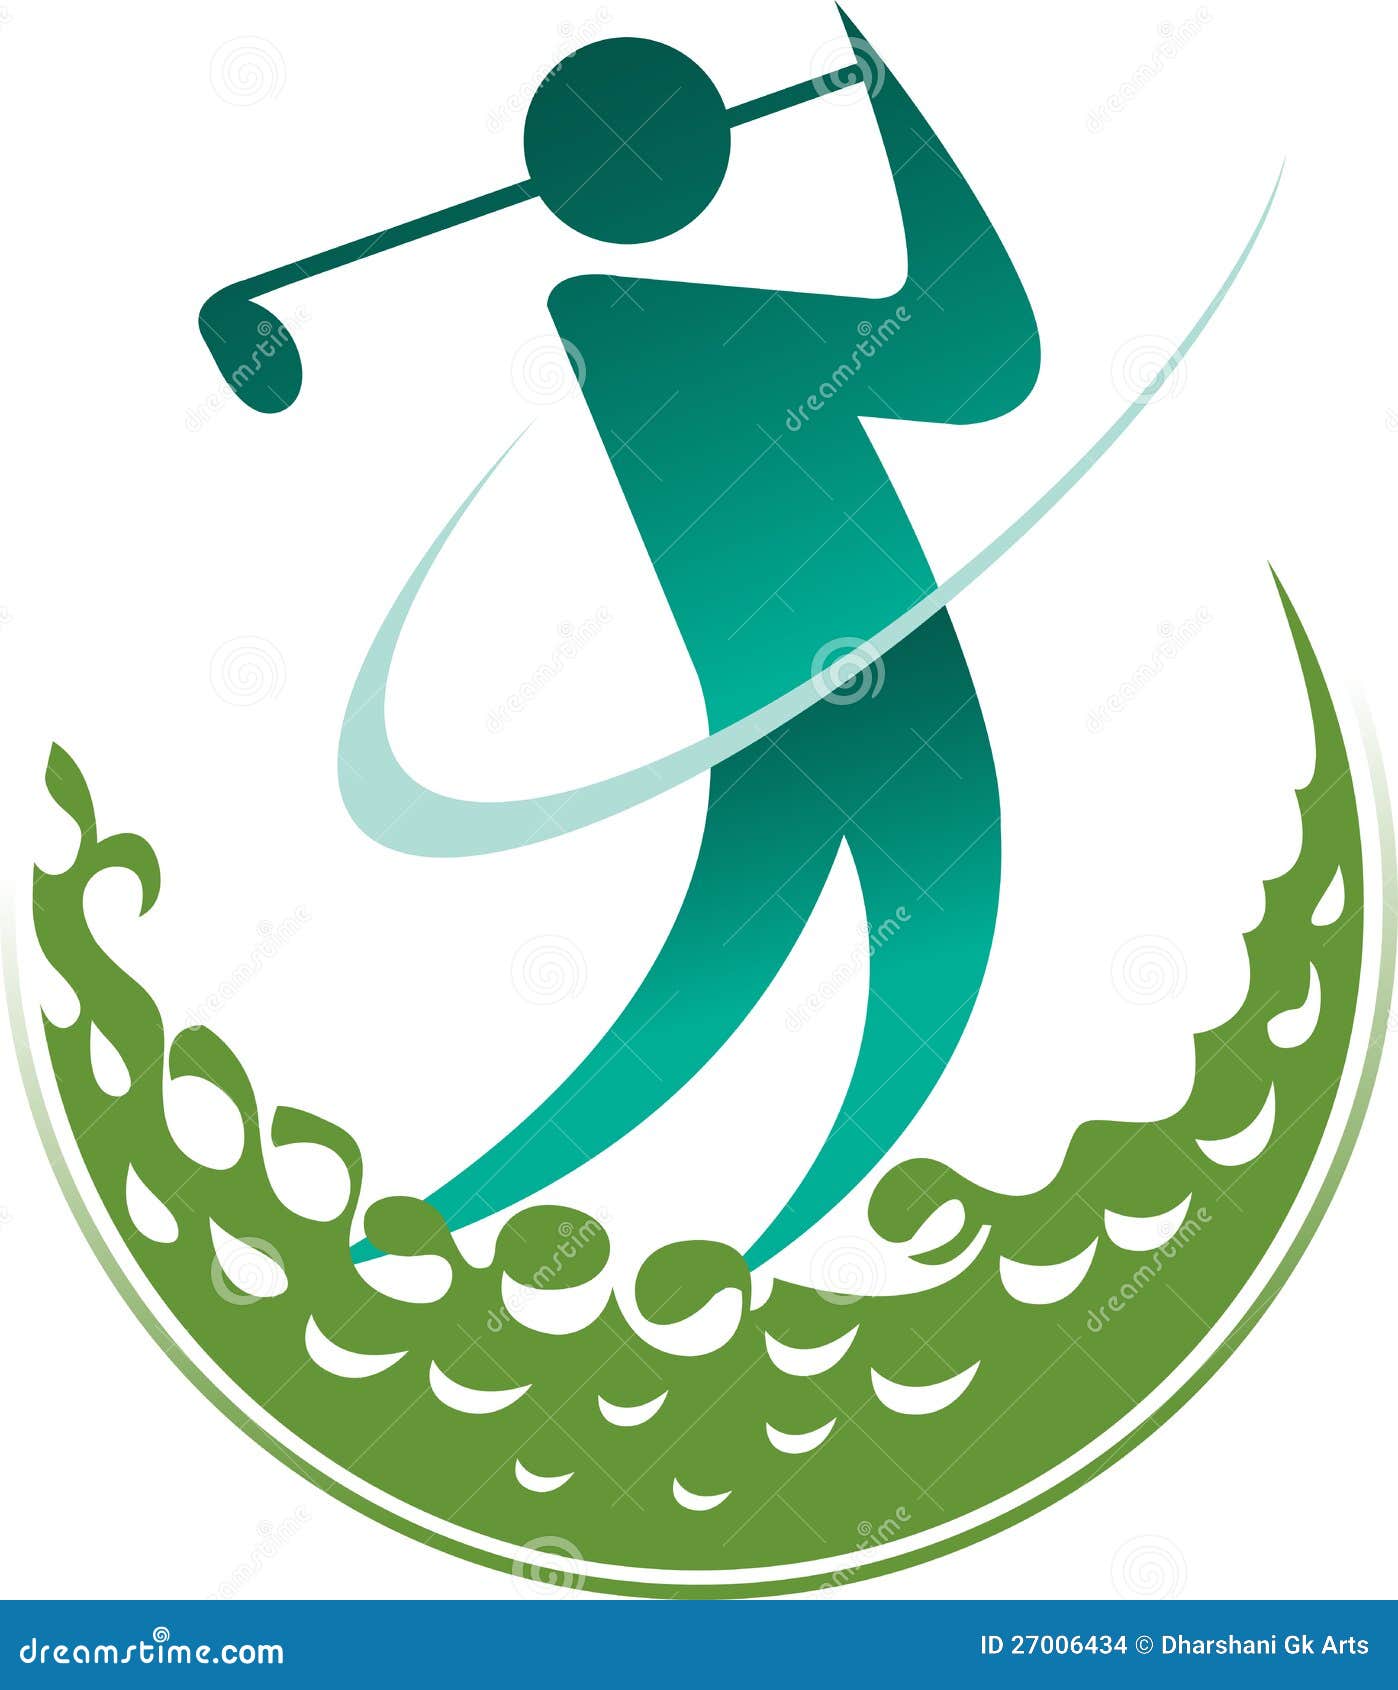 golf logo clip art free - photo #12